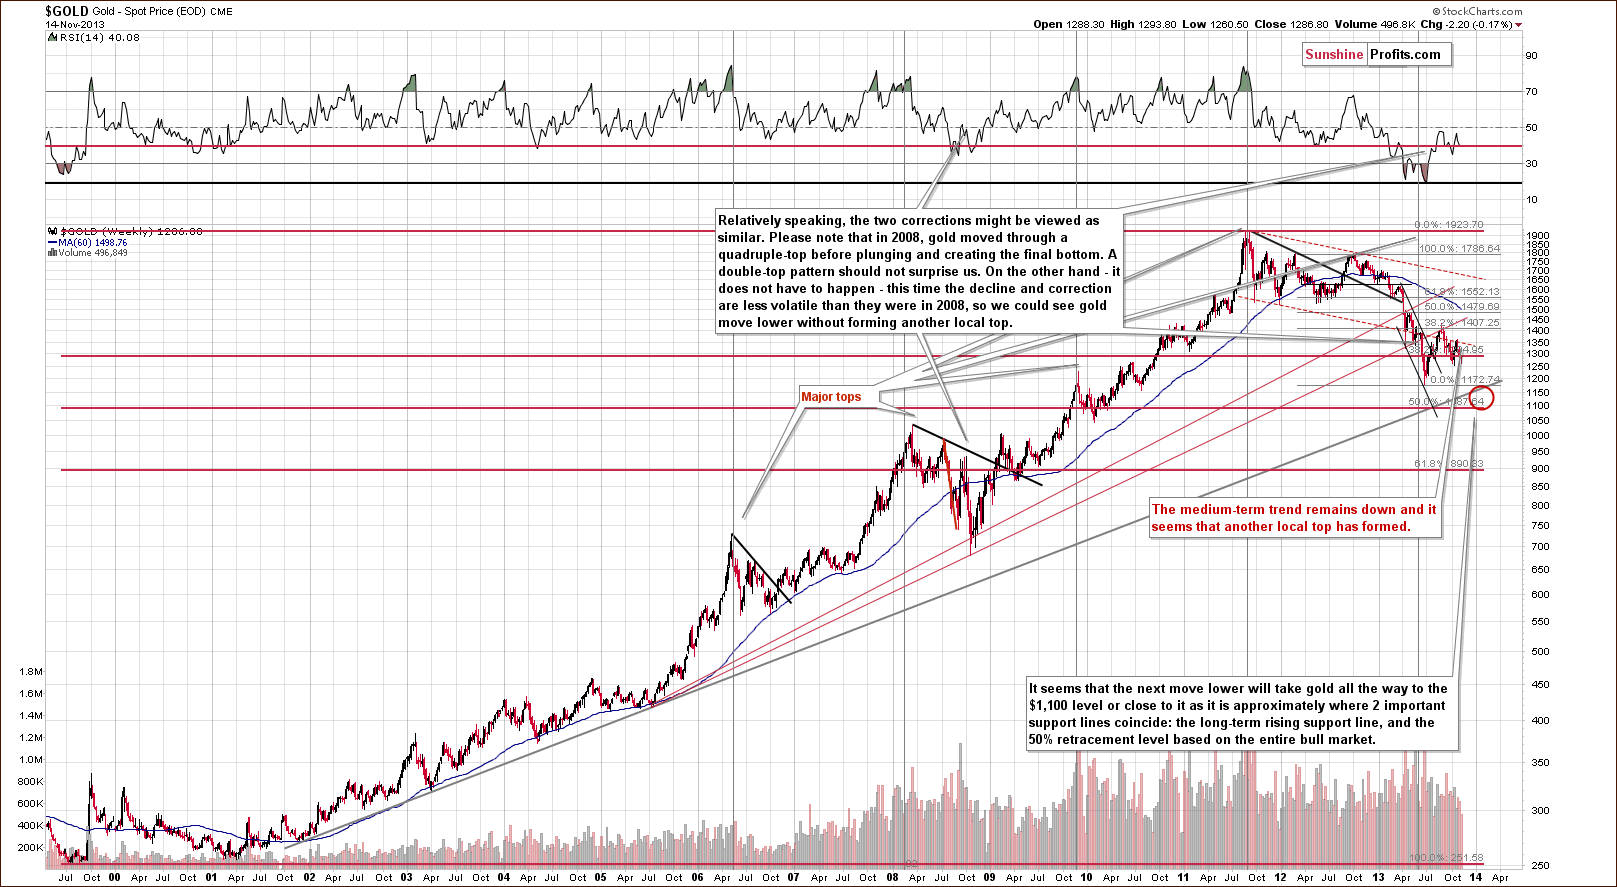 Long-term Gold price chart